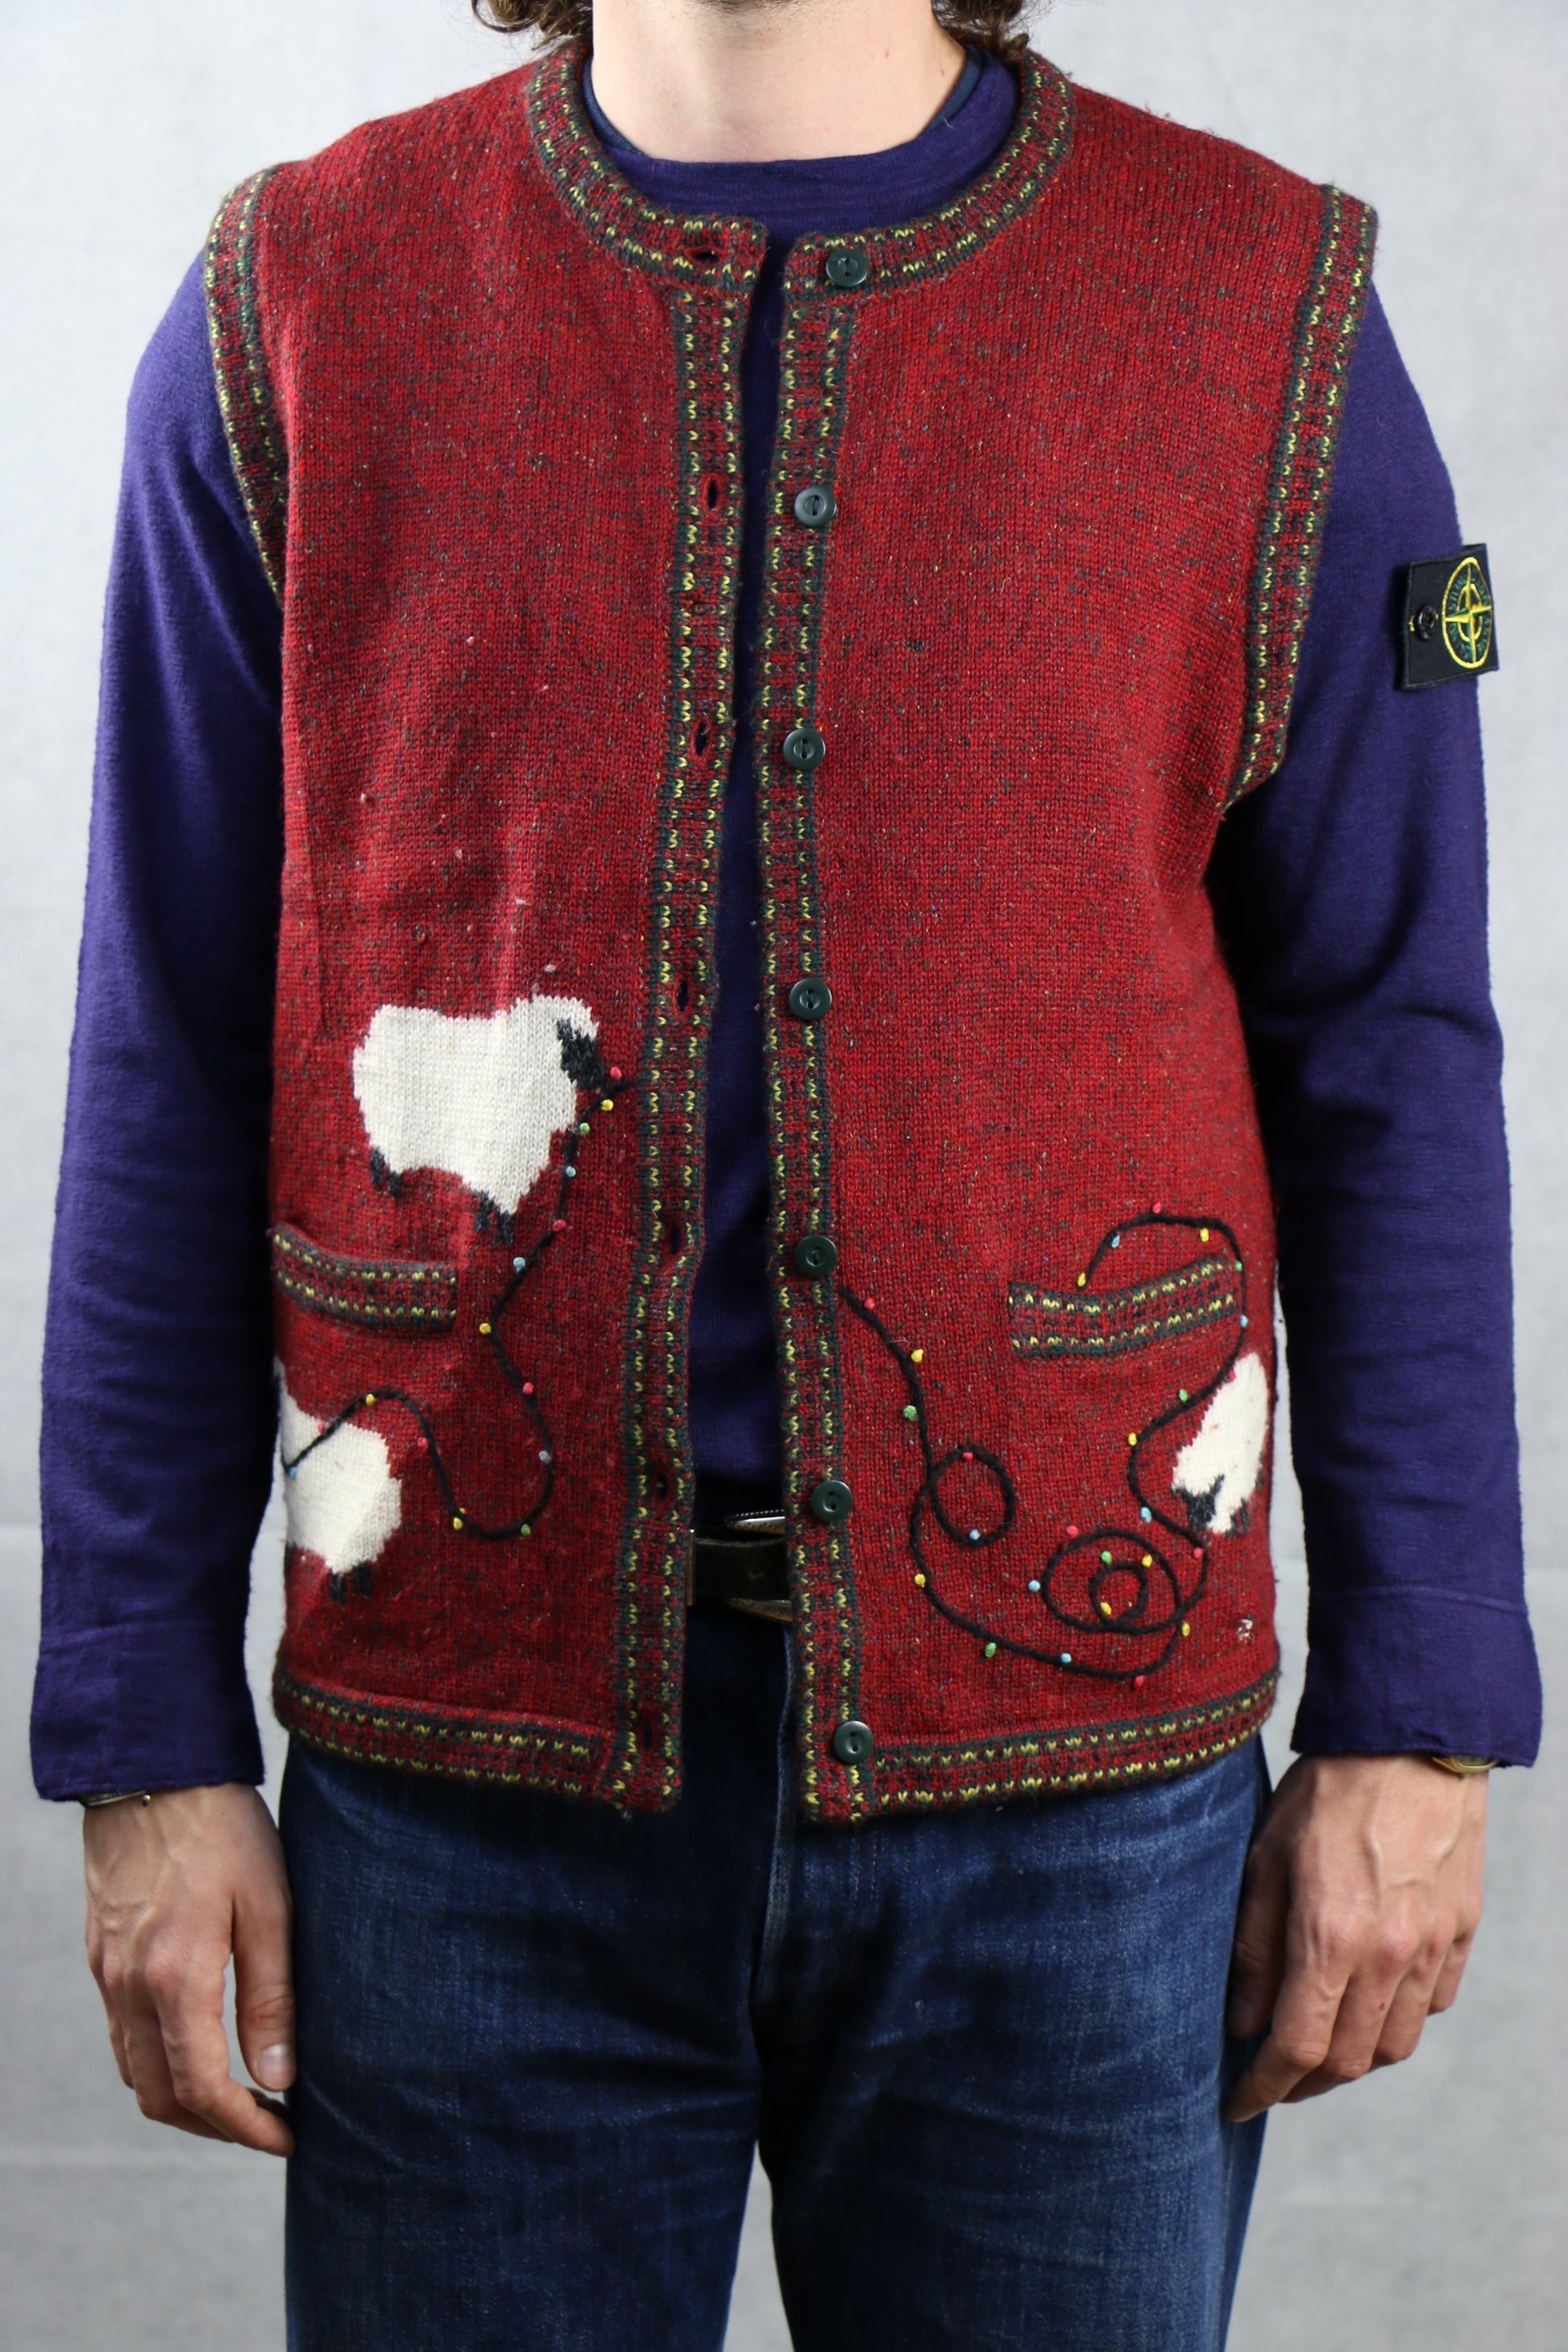 Woolrich Handmade Vest - vintage clothing clochard92.com